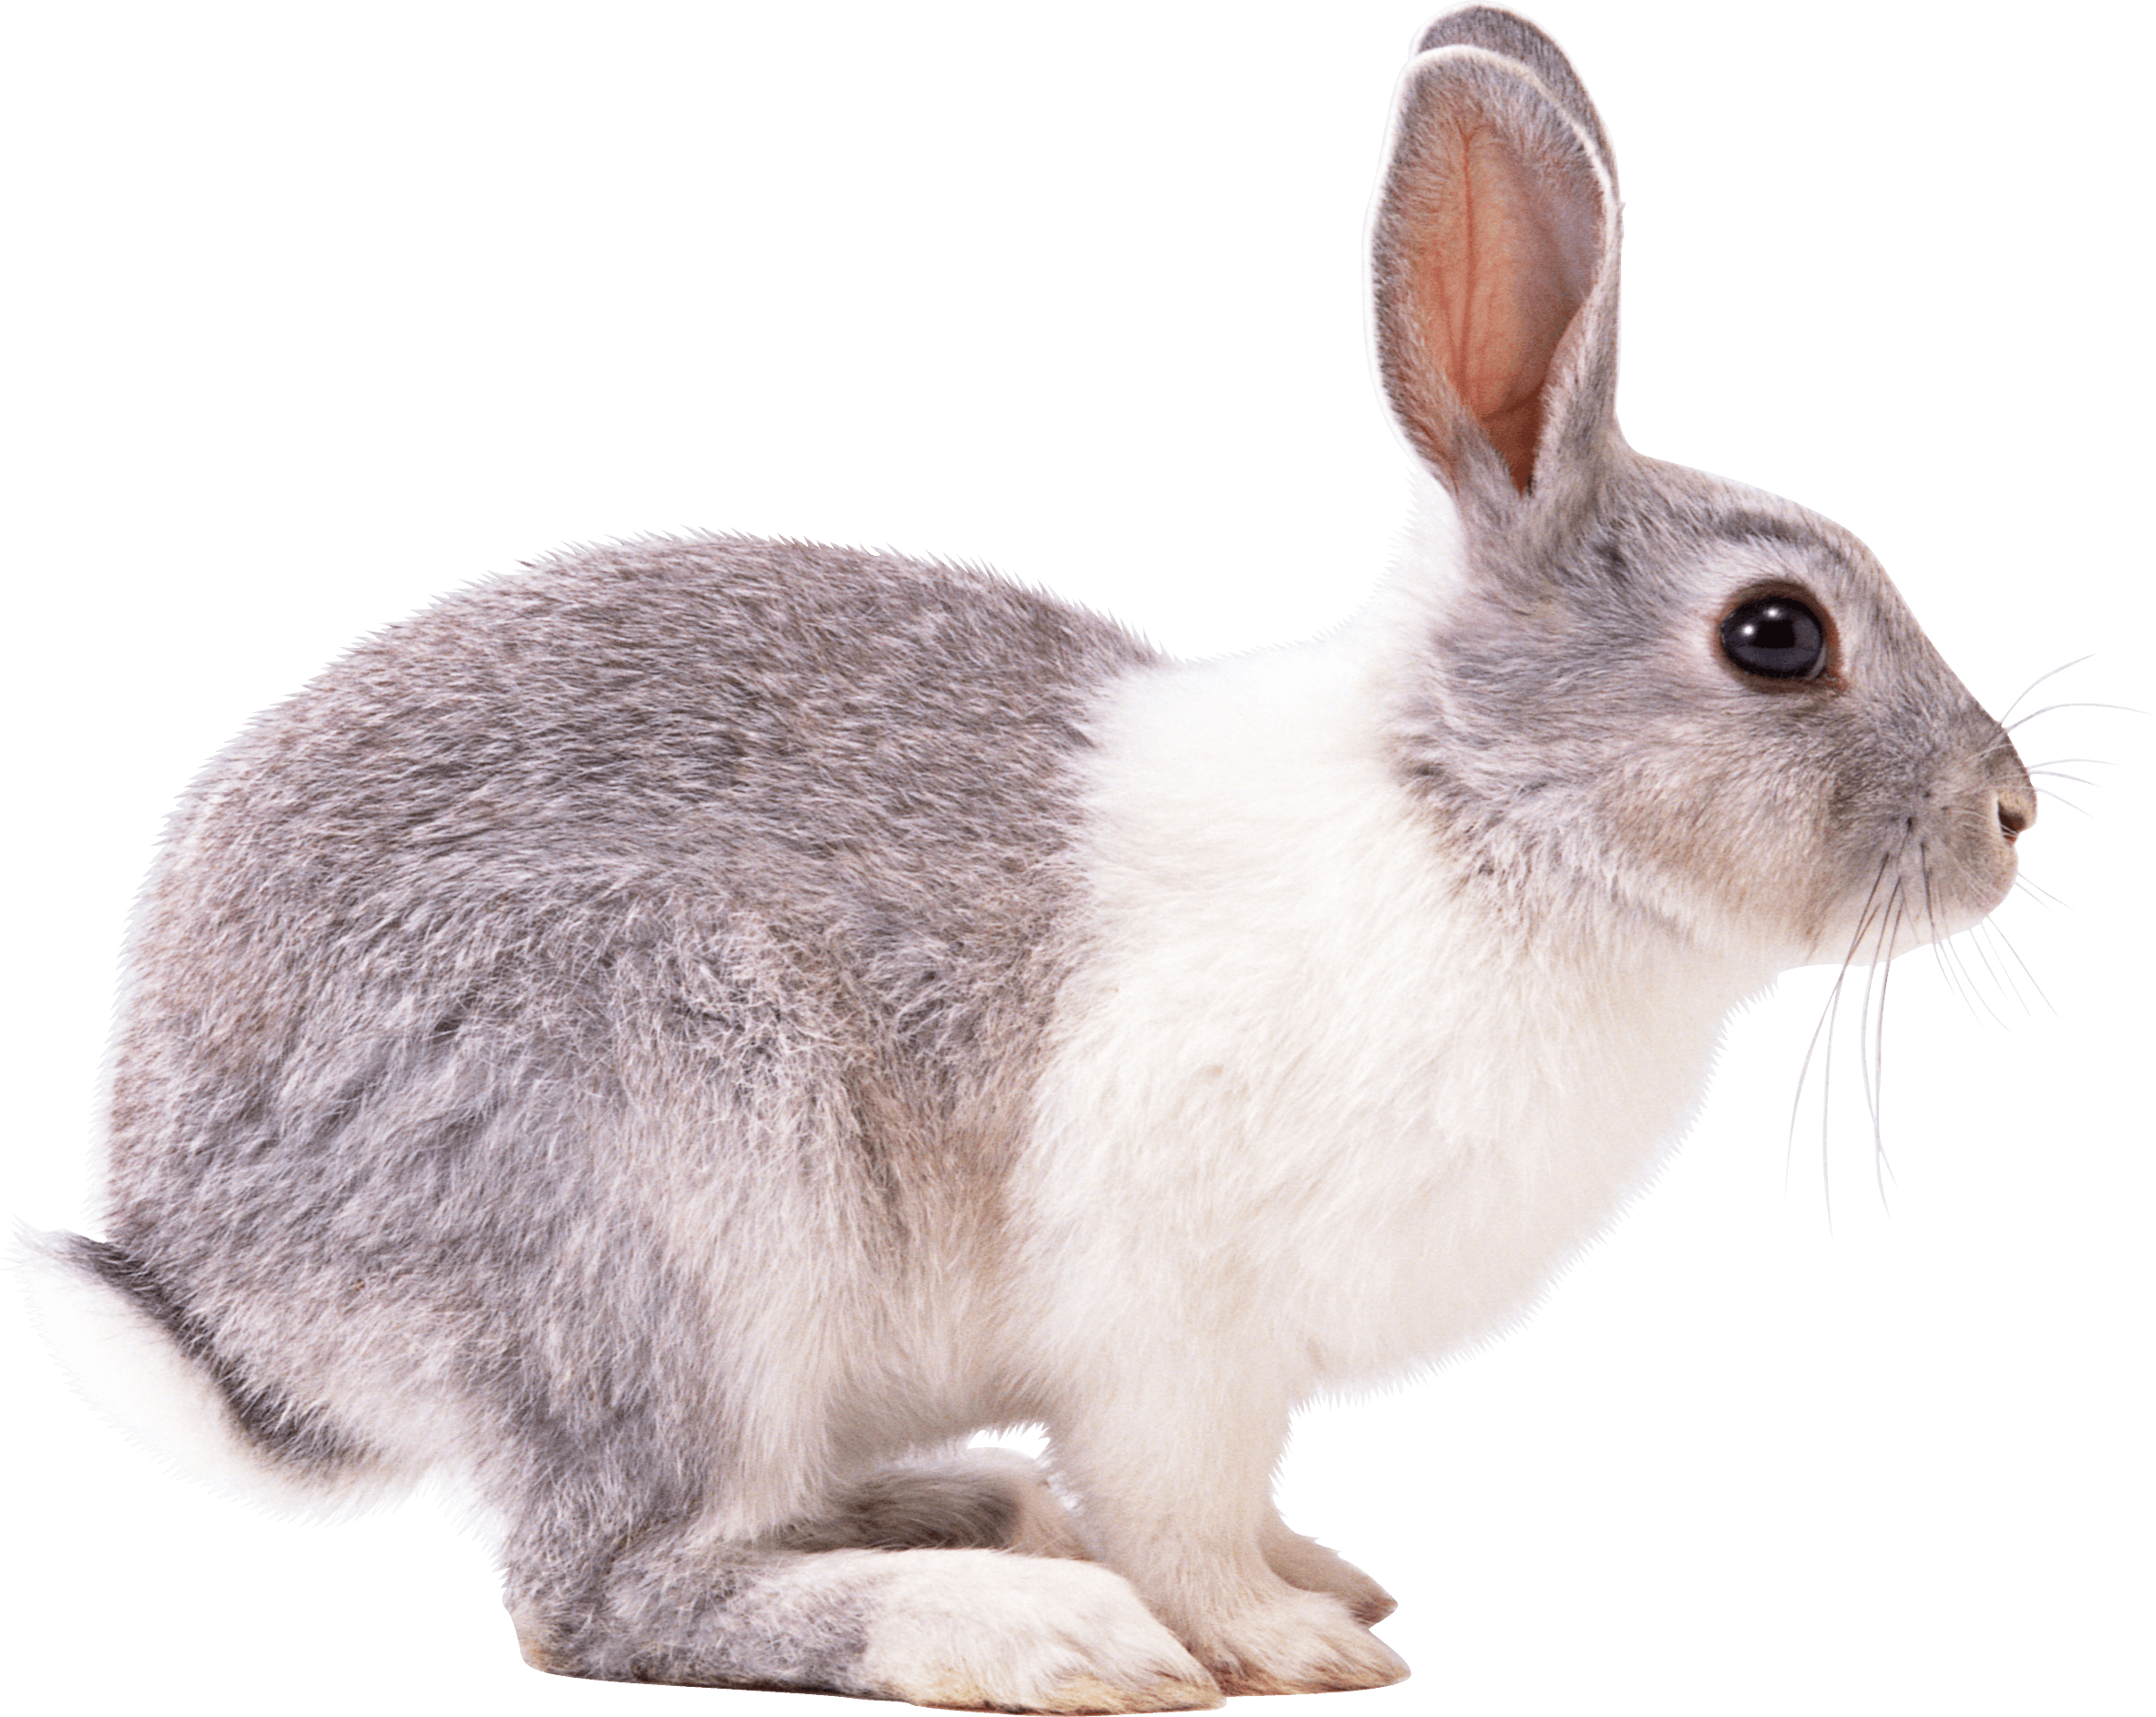 Rabbit PNG HD Quality